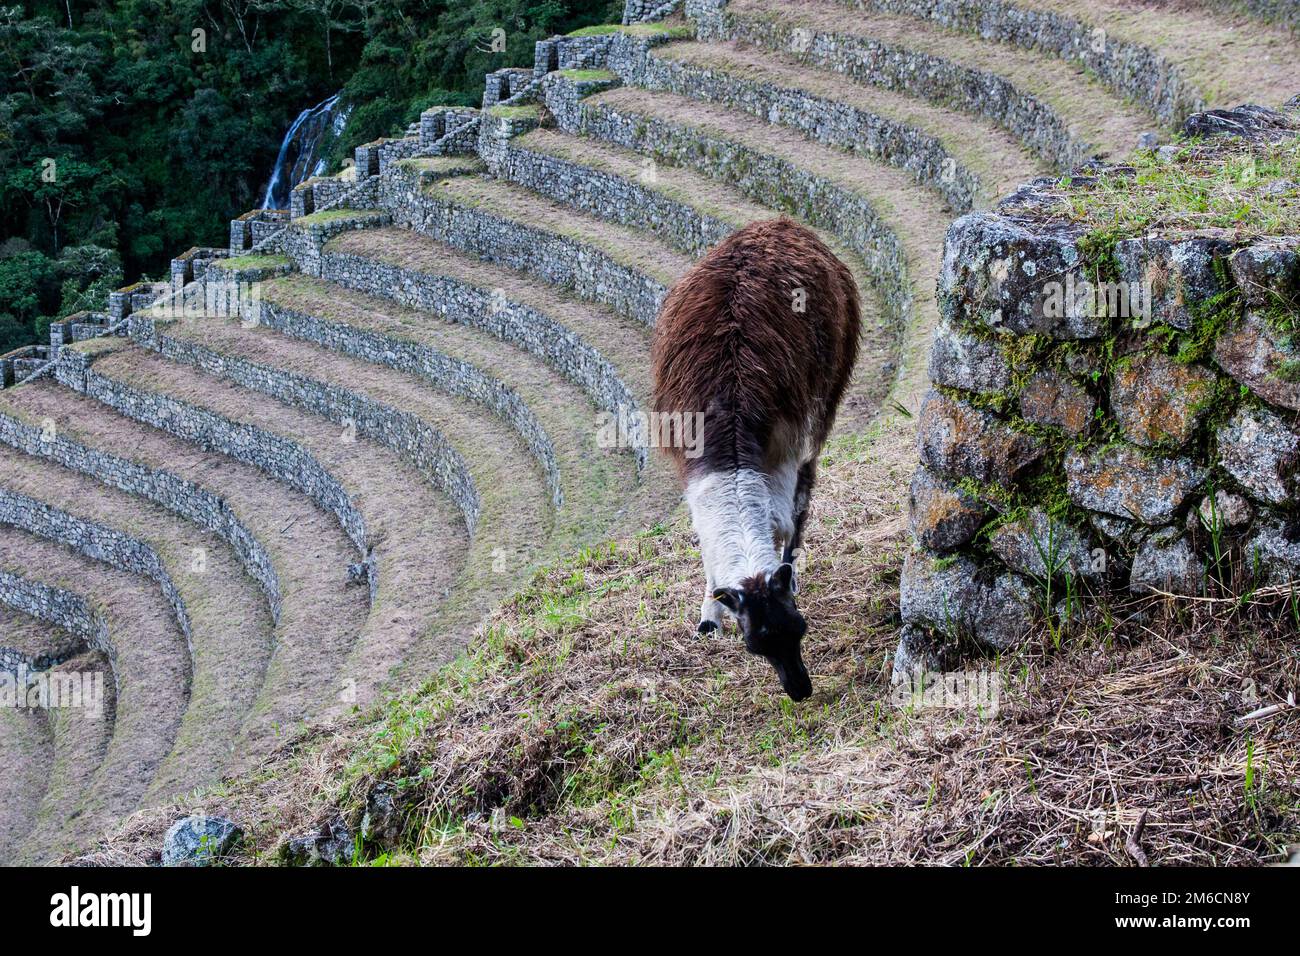 Llama in a farming terrace on the Inca Trail to Machu Picchu. Stock Photo